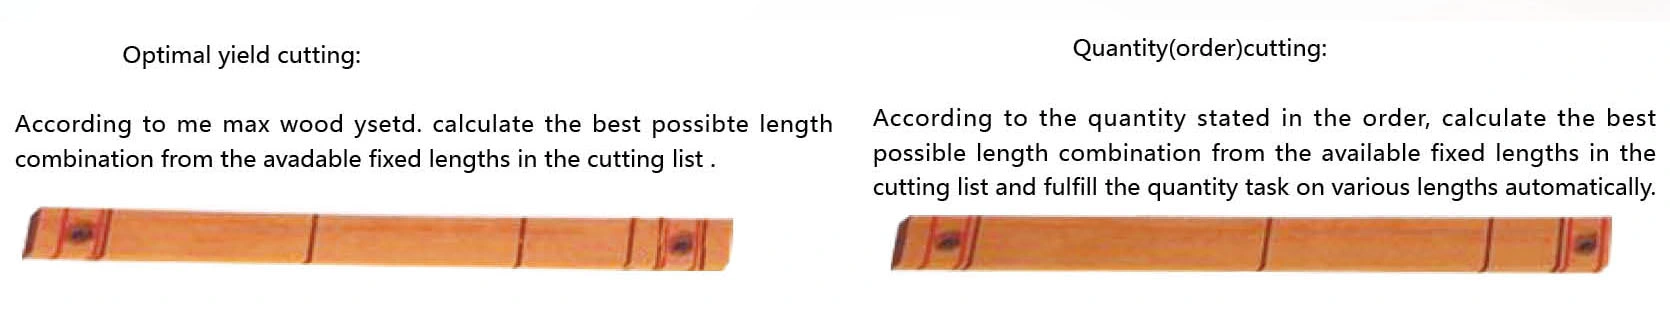 Intelligent High Precision Wood Chop Optimizing Cross Cut Saw Machine